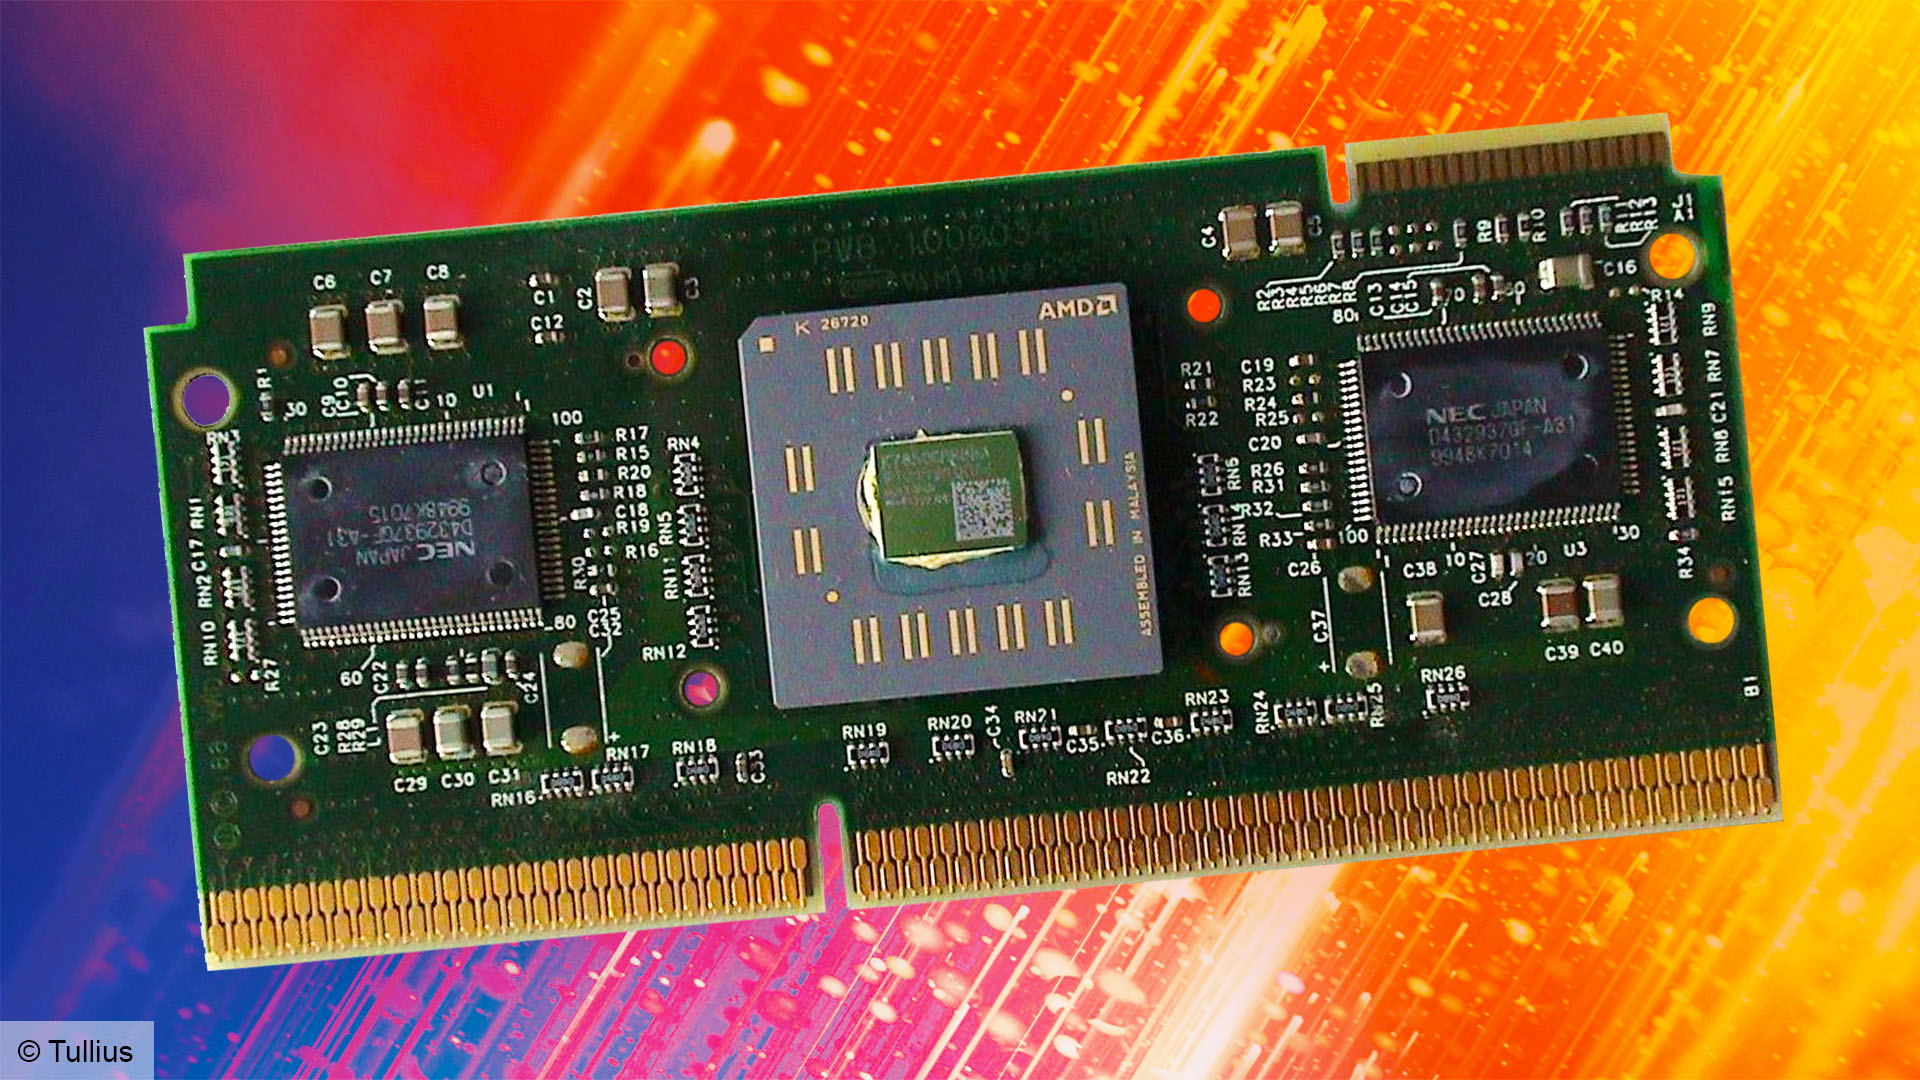 AMD Athlon K7 CPU PCB in Slot A format